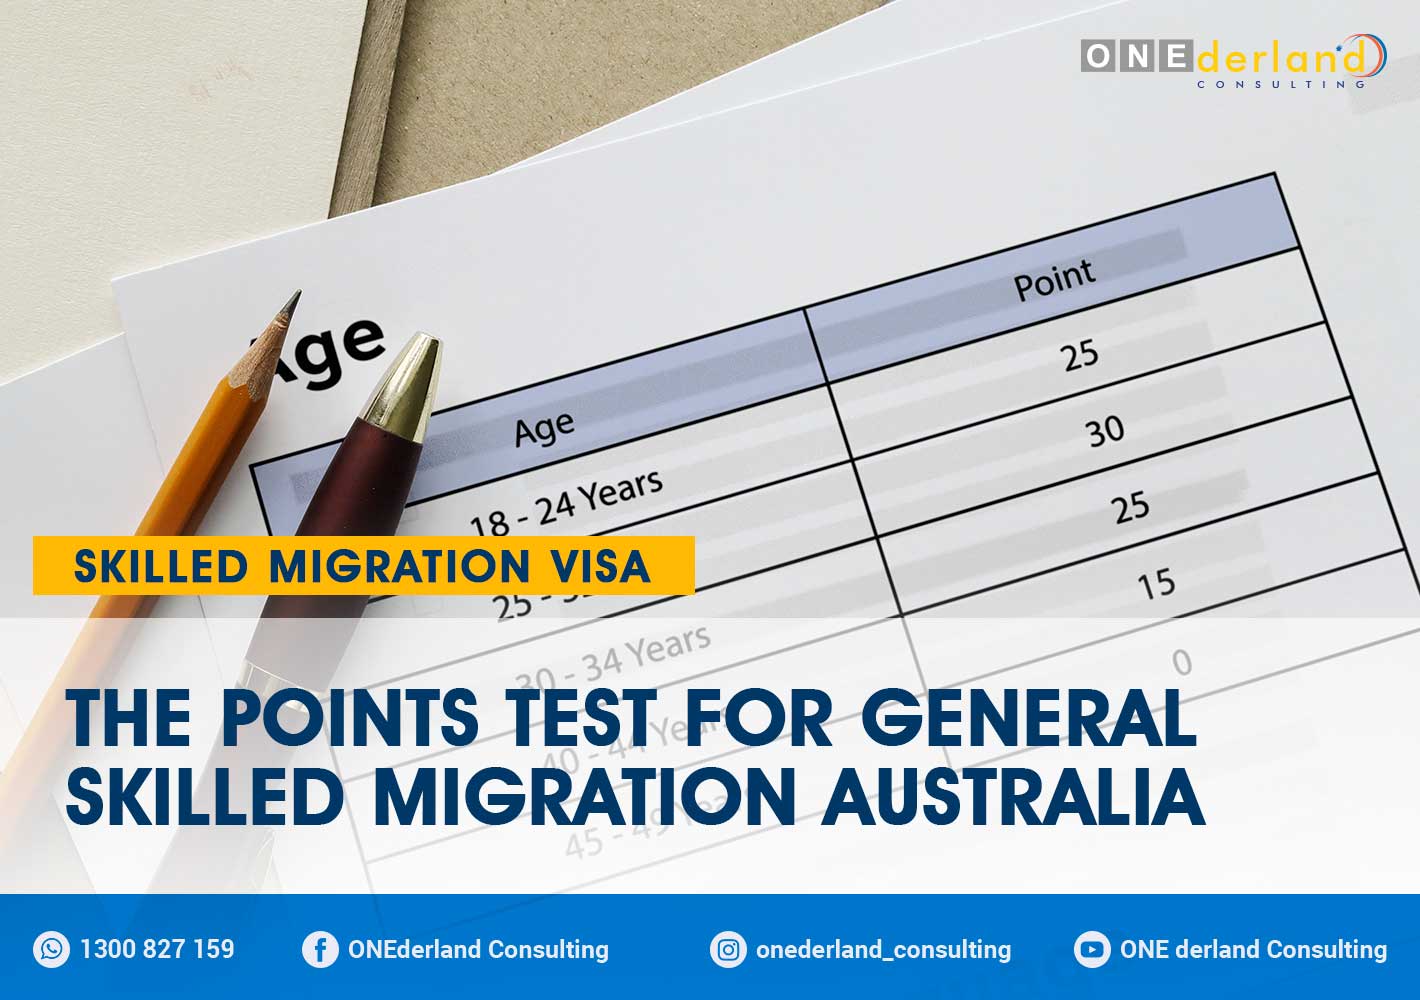 The Points Test for General Skilled Migration Australia